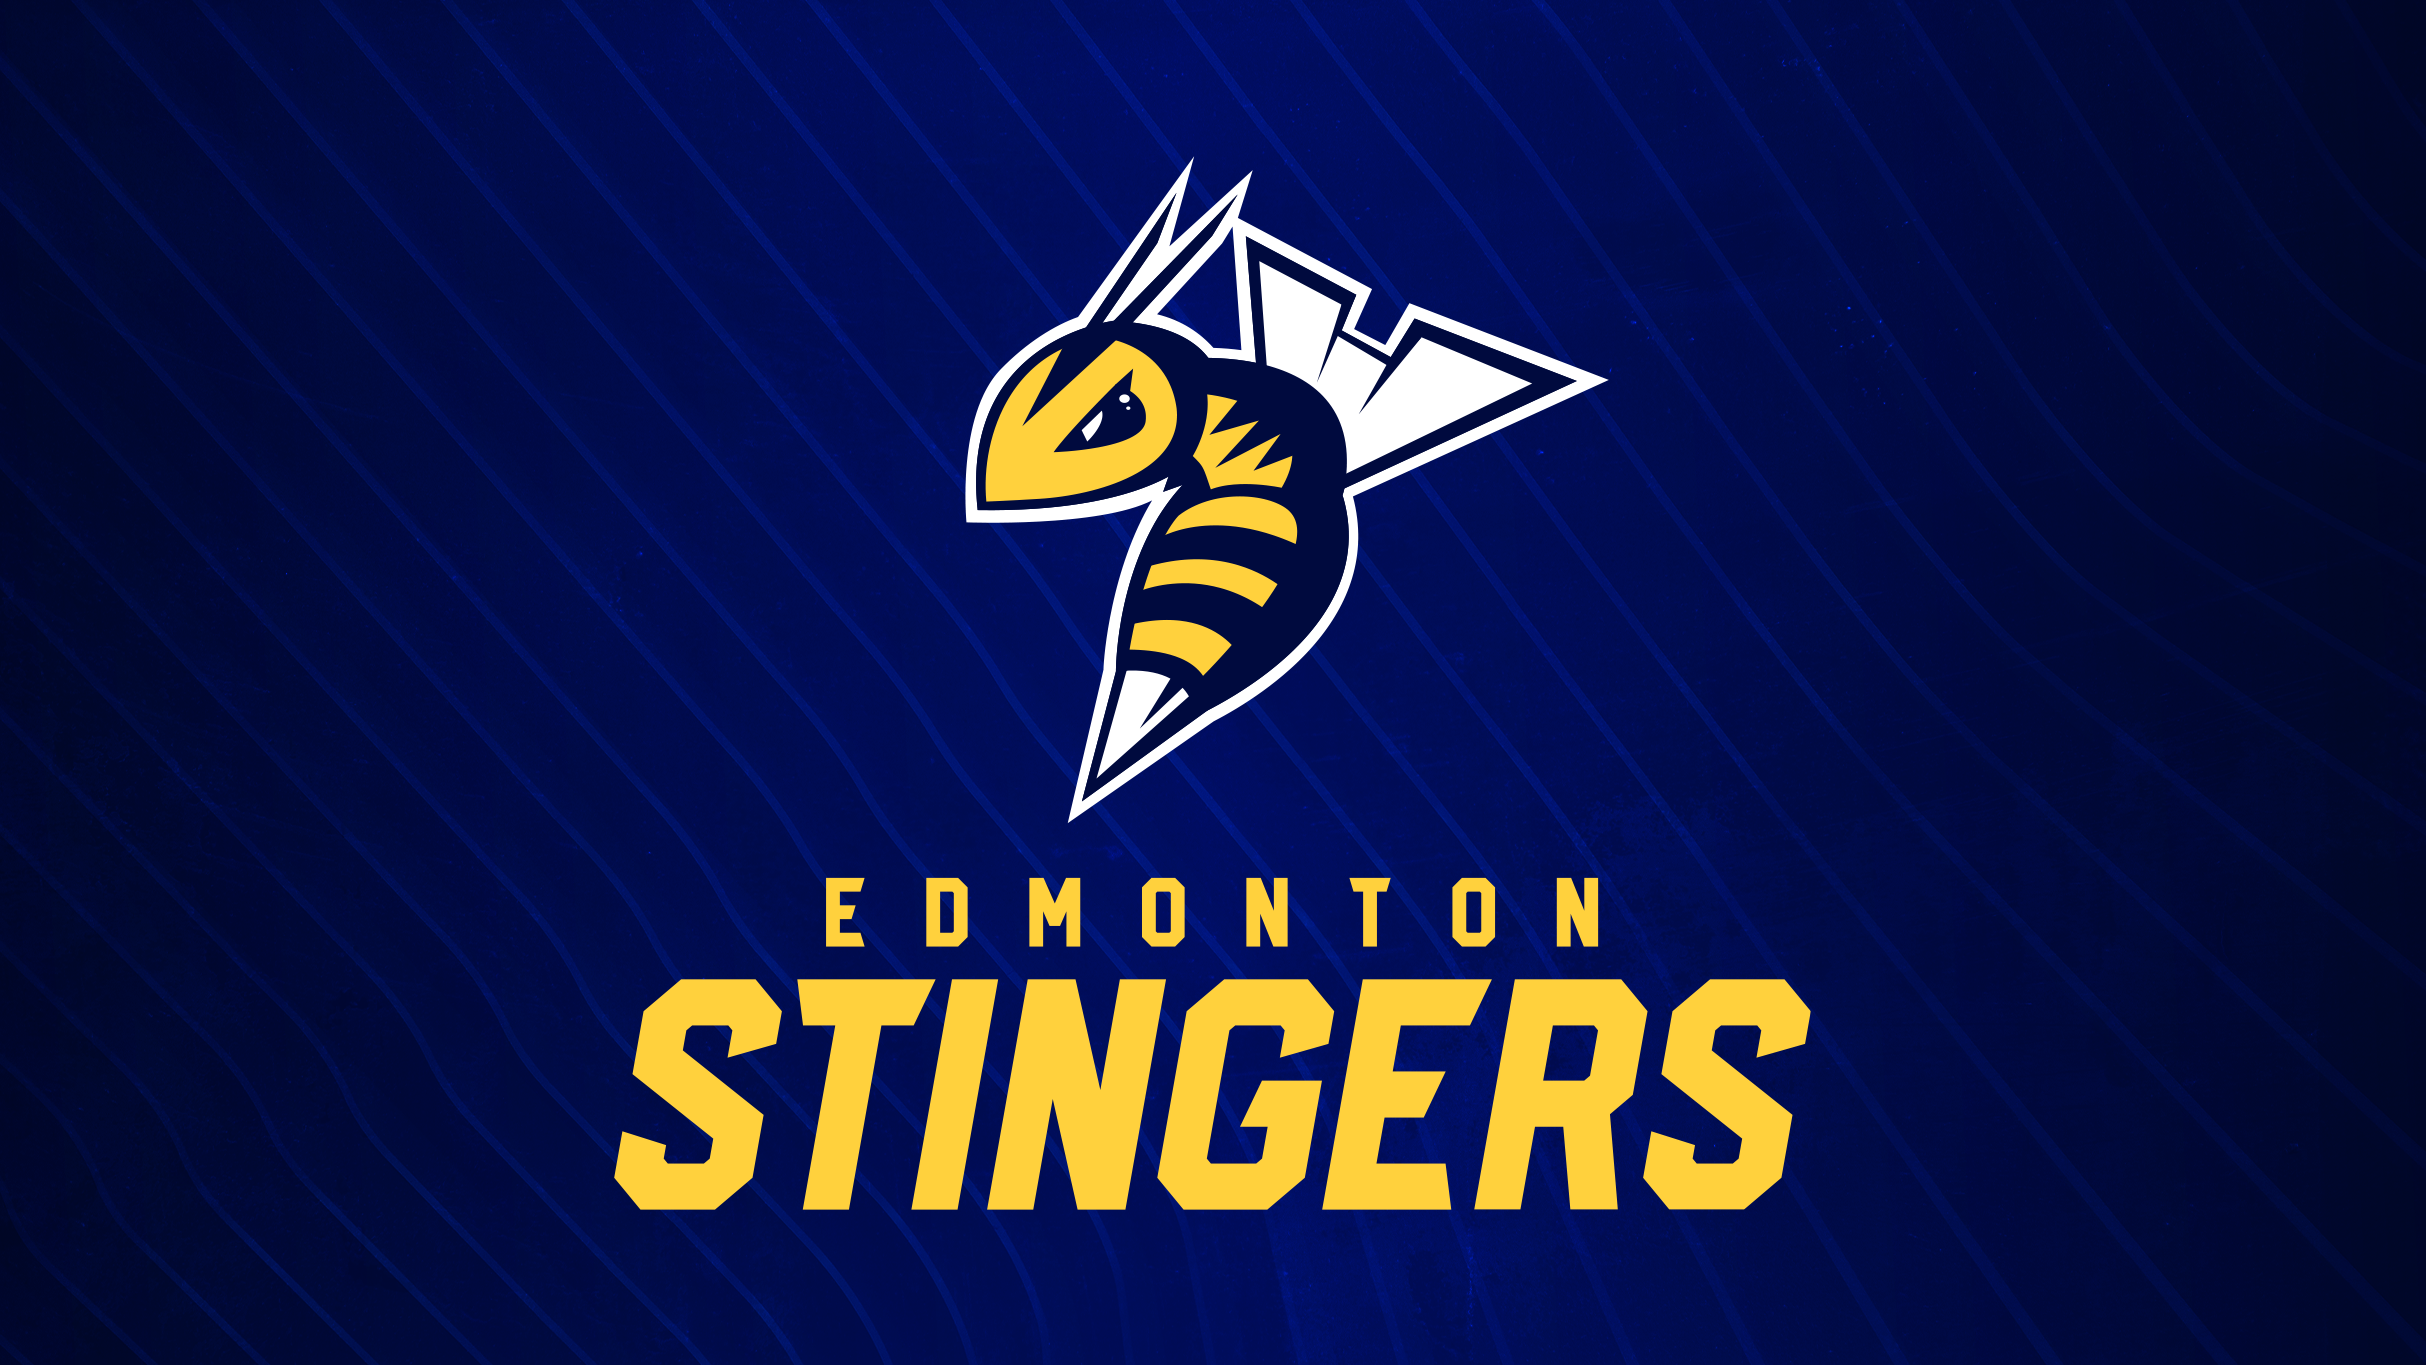 Edmonton Stingers vs. Vancouver Bandits in Edmonton promo photo for Exclusive presale offer code